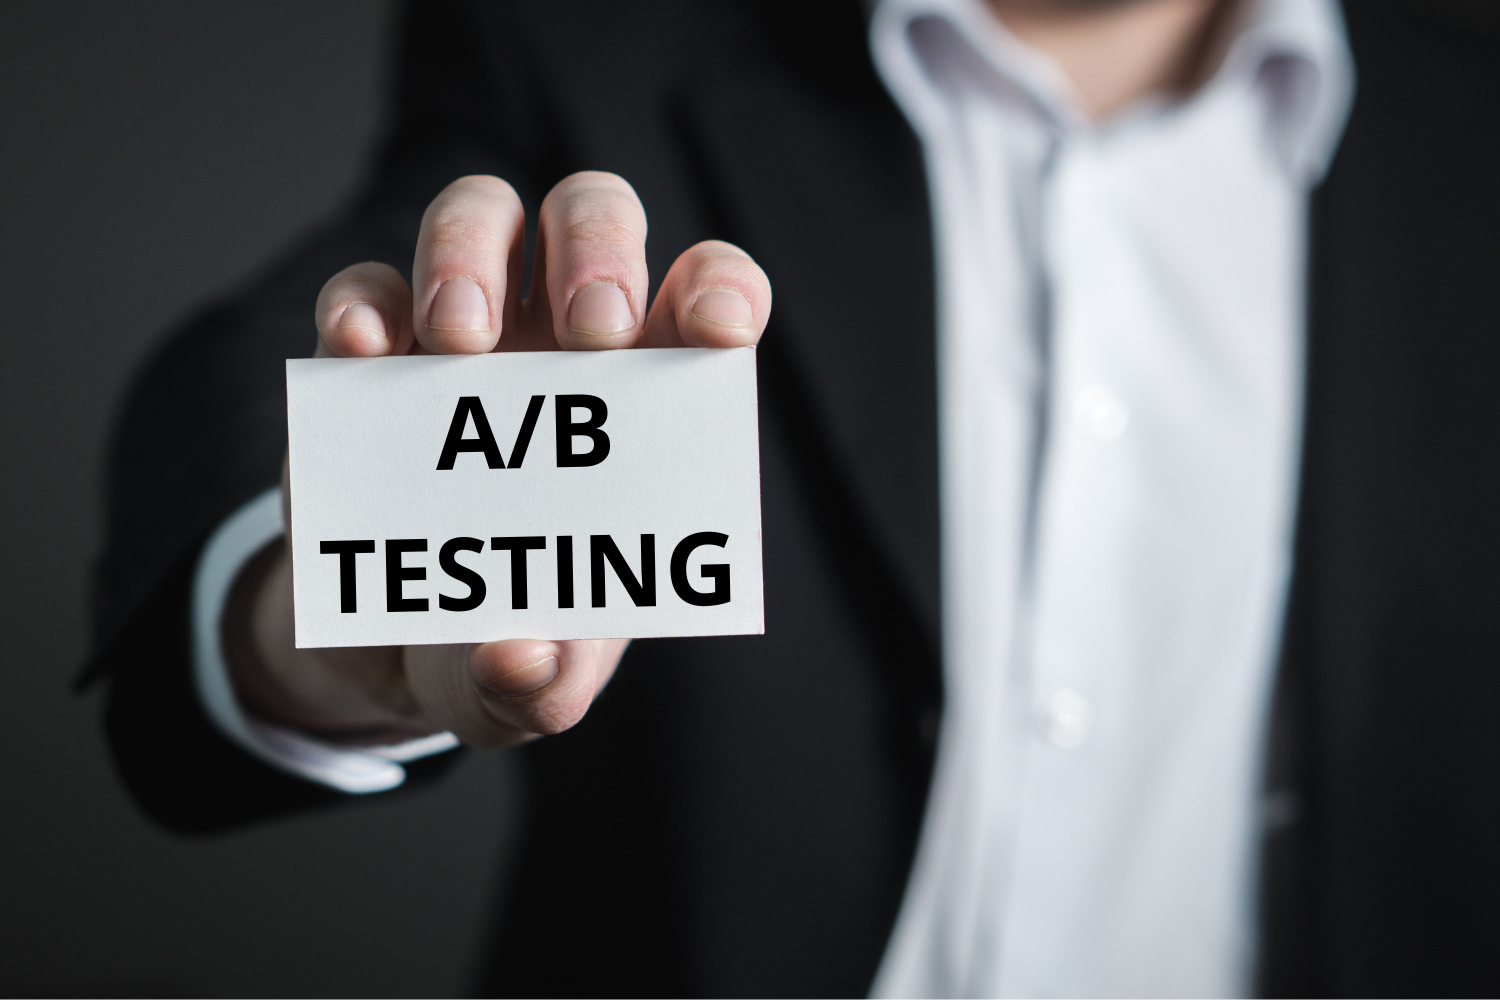 a/b testing